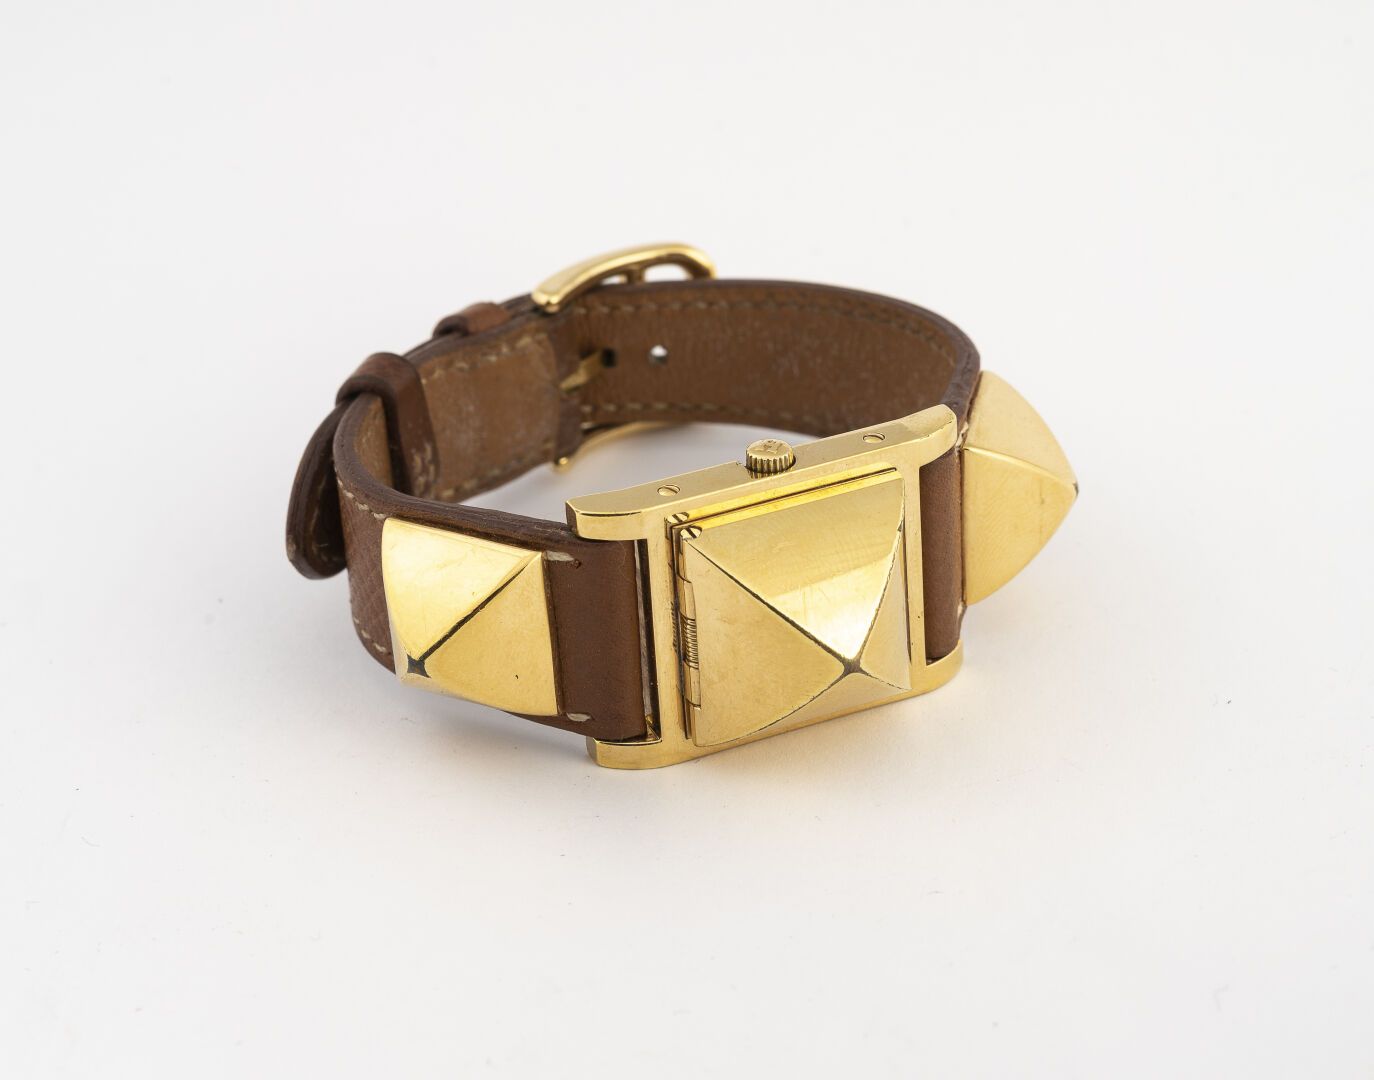 Null HERMÈS.

Armband Damenuhr Modell "Médor". 

Aus vergoldetem Metall.

Das qu&hellip;